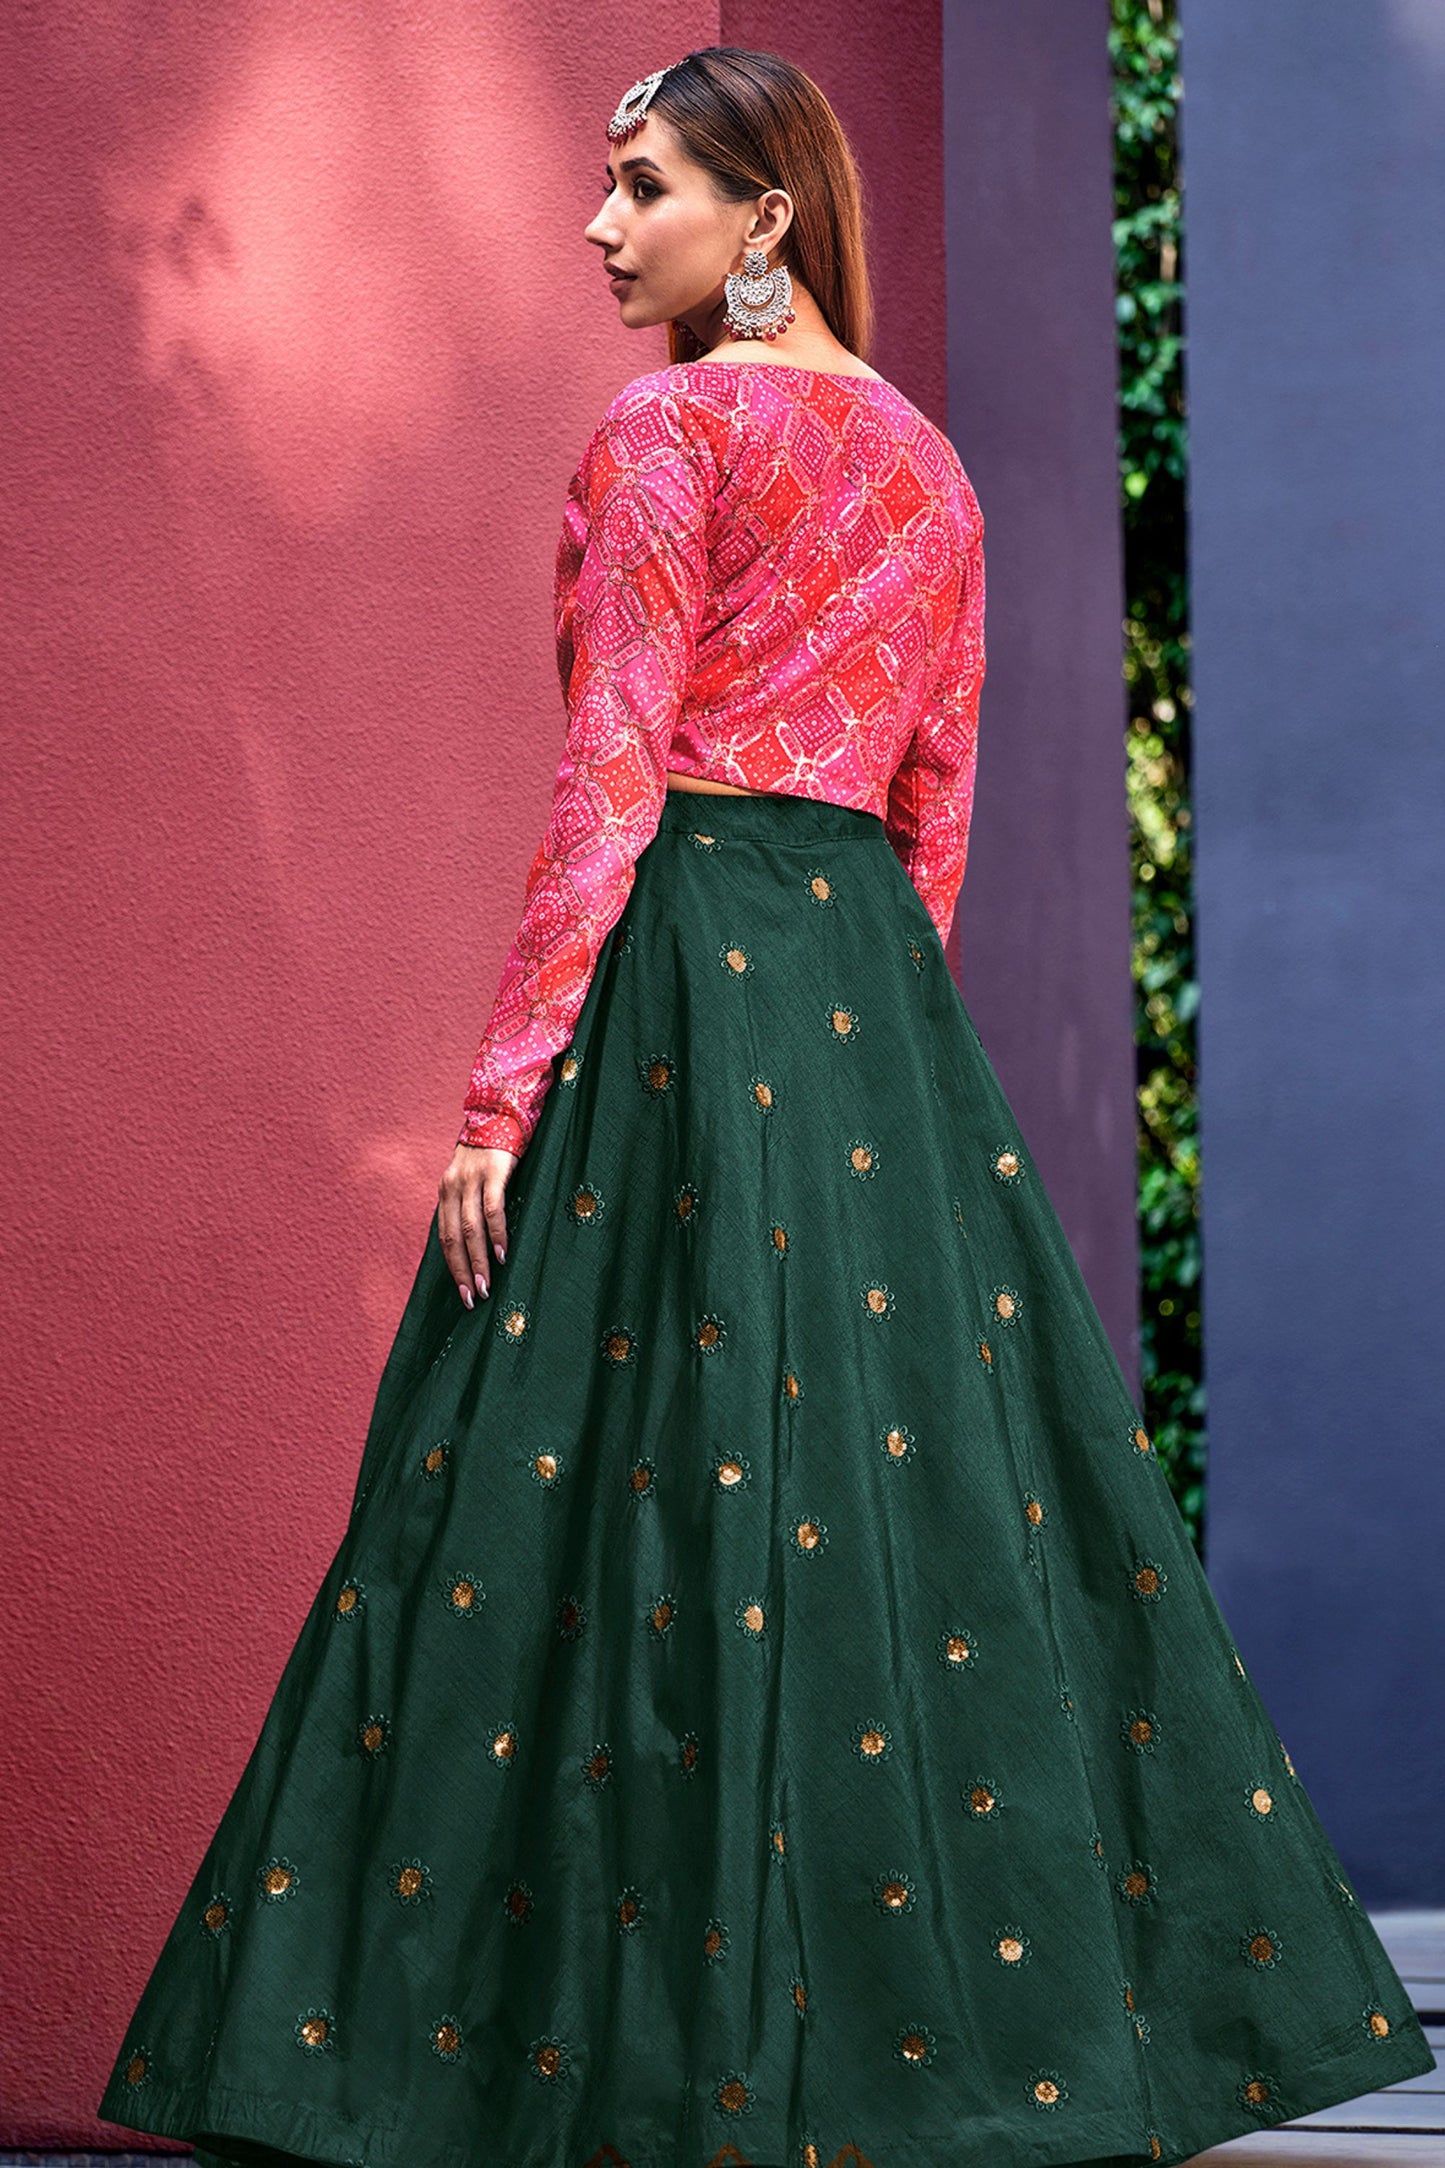 Green Pakistani Art Silk Lehenga Choli For Indian Festivals & Weddings - Print Work, Sequence Embroidery Work,